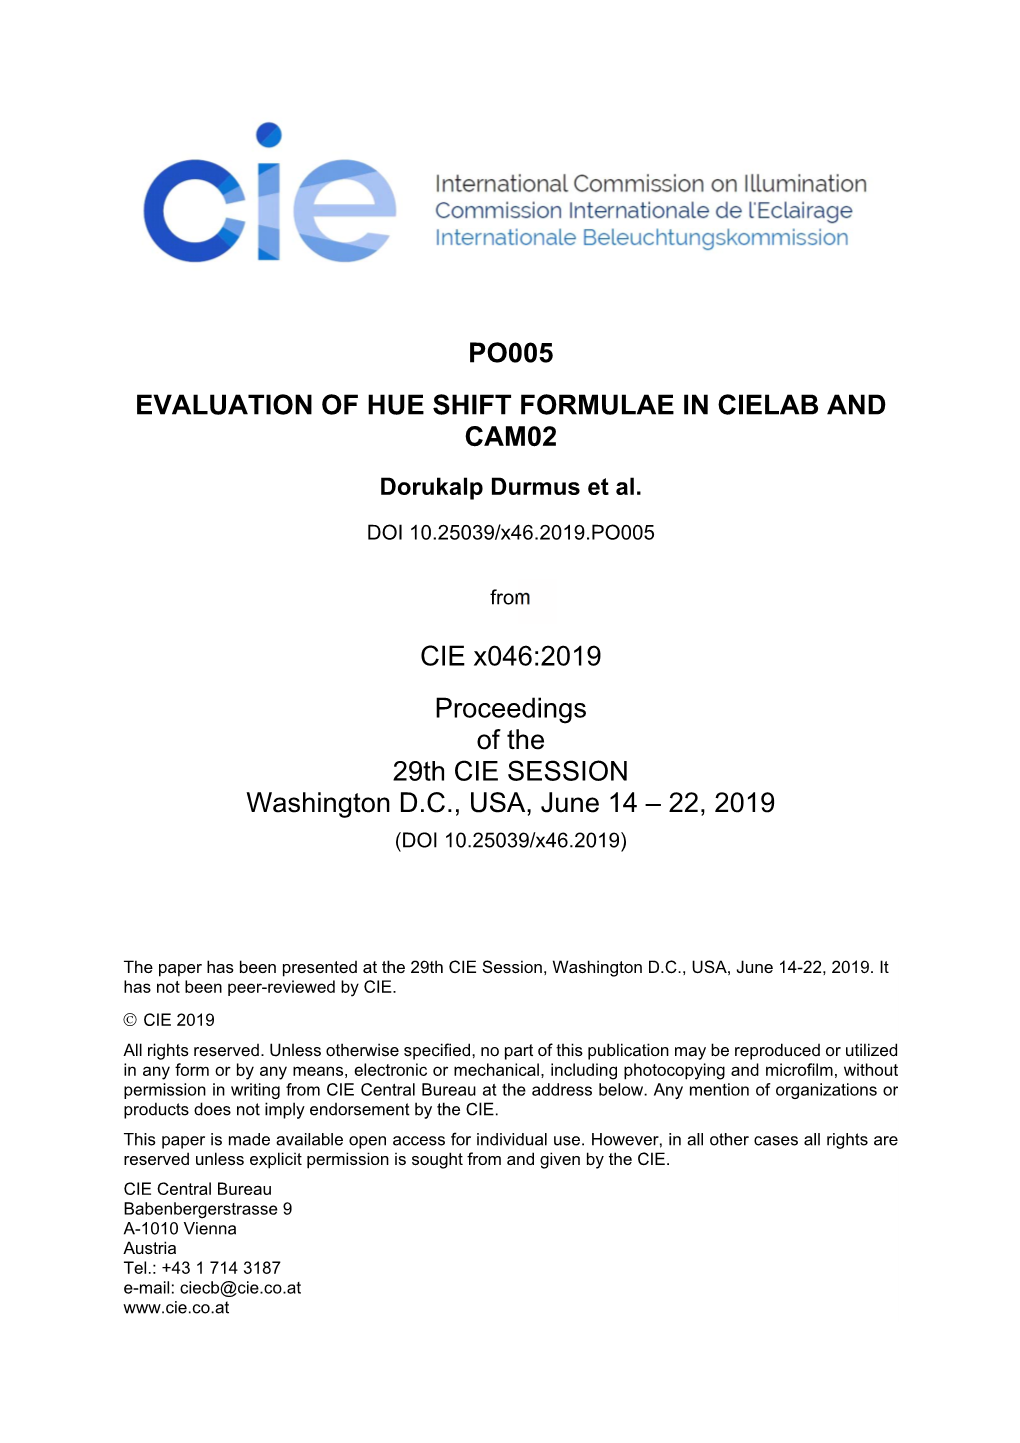 PO005 EVALUATION of HUE SHIFT FORMULAE in CIELAB and CAM02 CIE X046:2019 Proceedings of the 29Th CIE SESSION Washington D.C., U